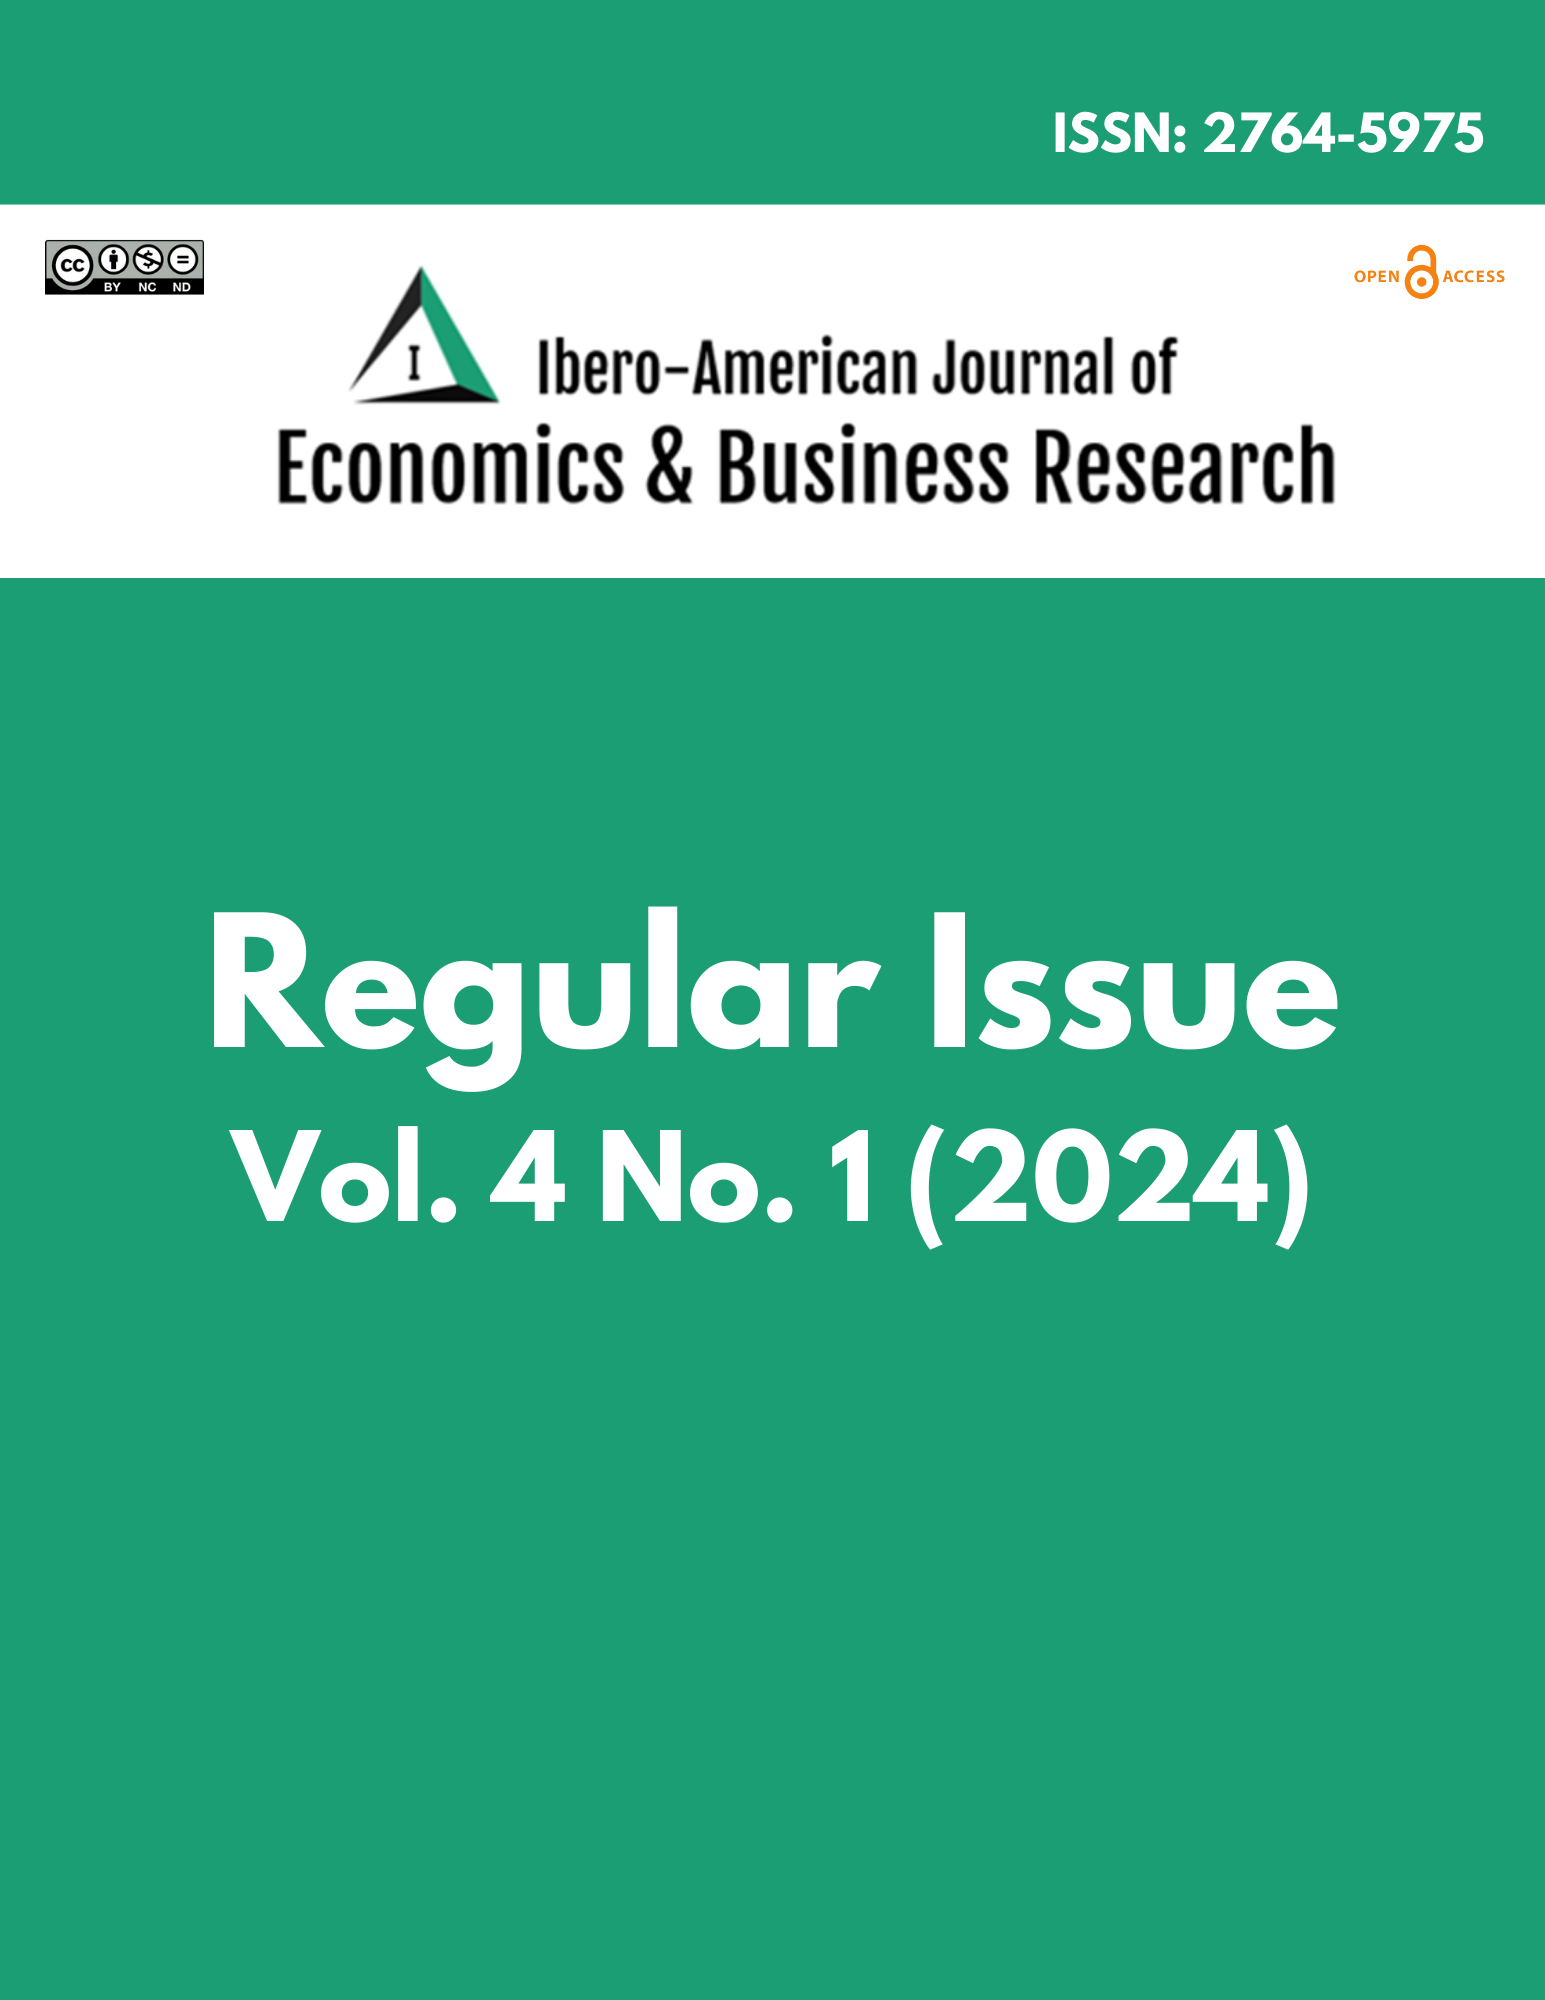 					View Vol. 4 No. 1 (2024): Regular Issue
				